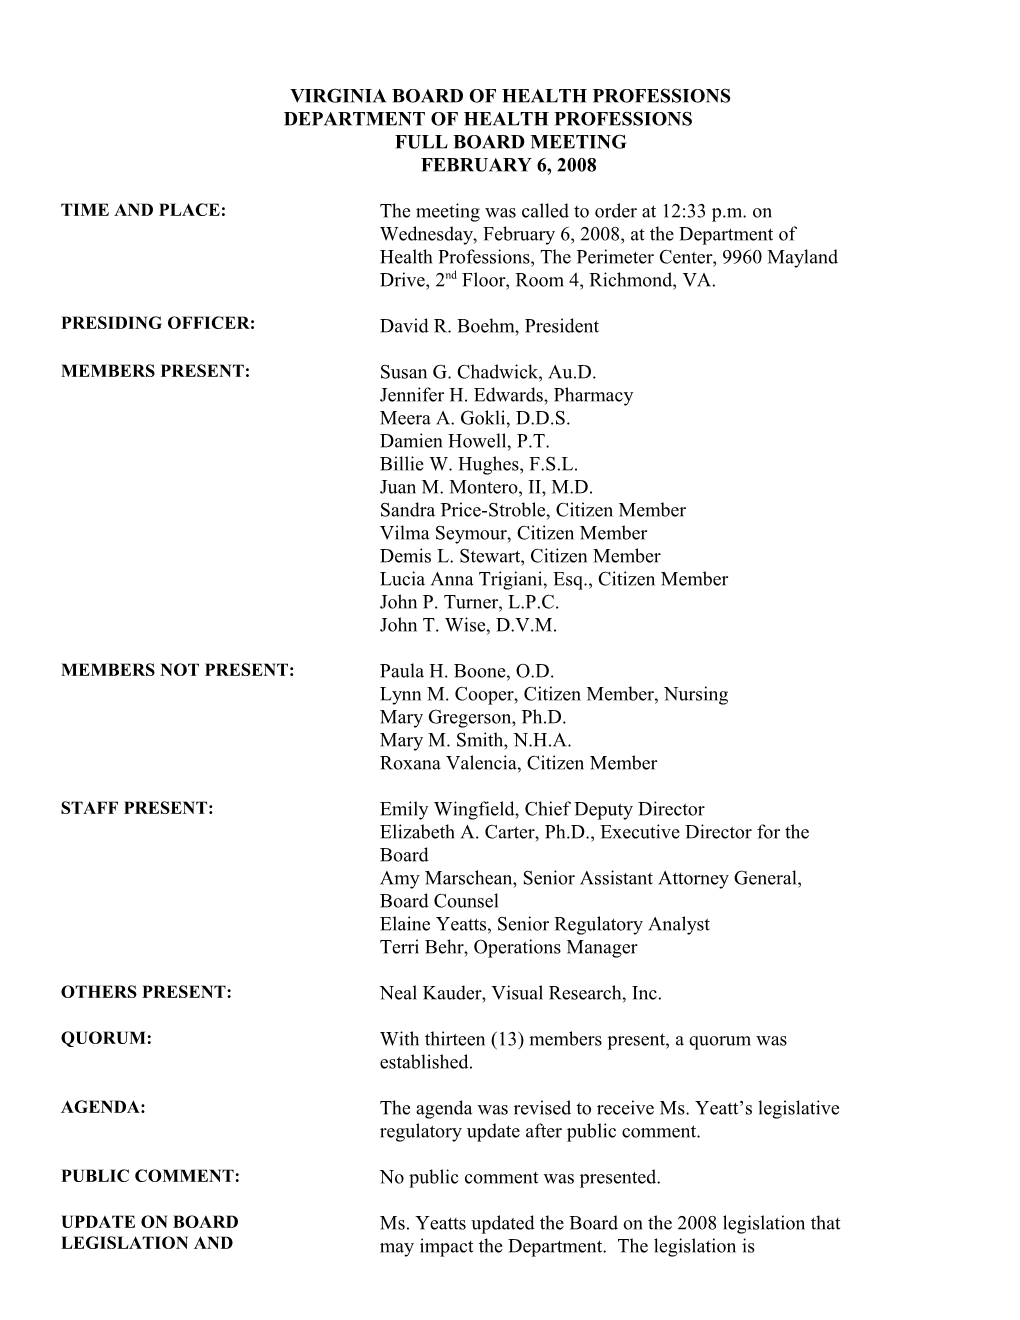 Board of Health Professions Minutes Feb 2008